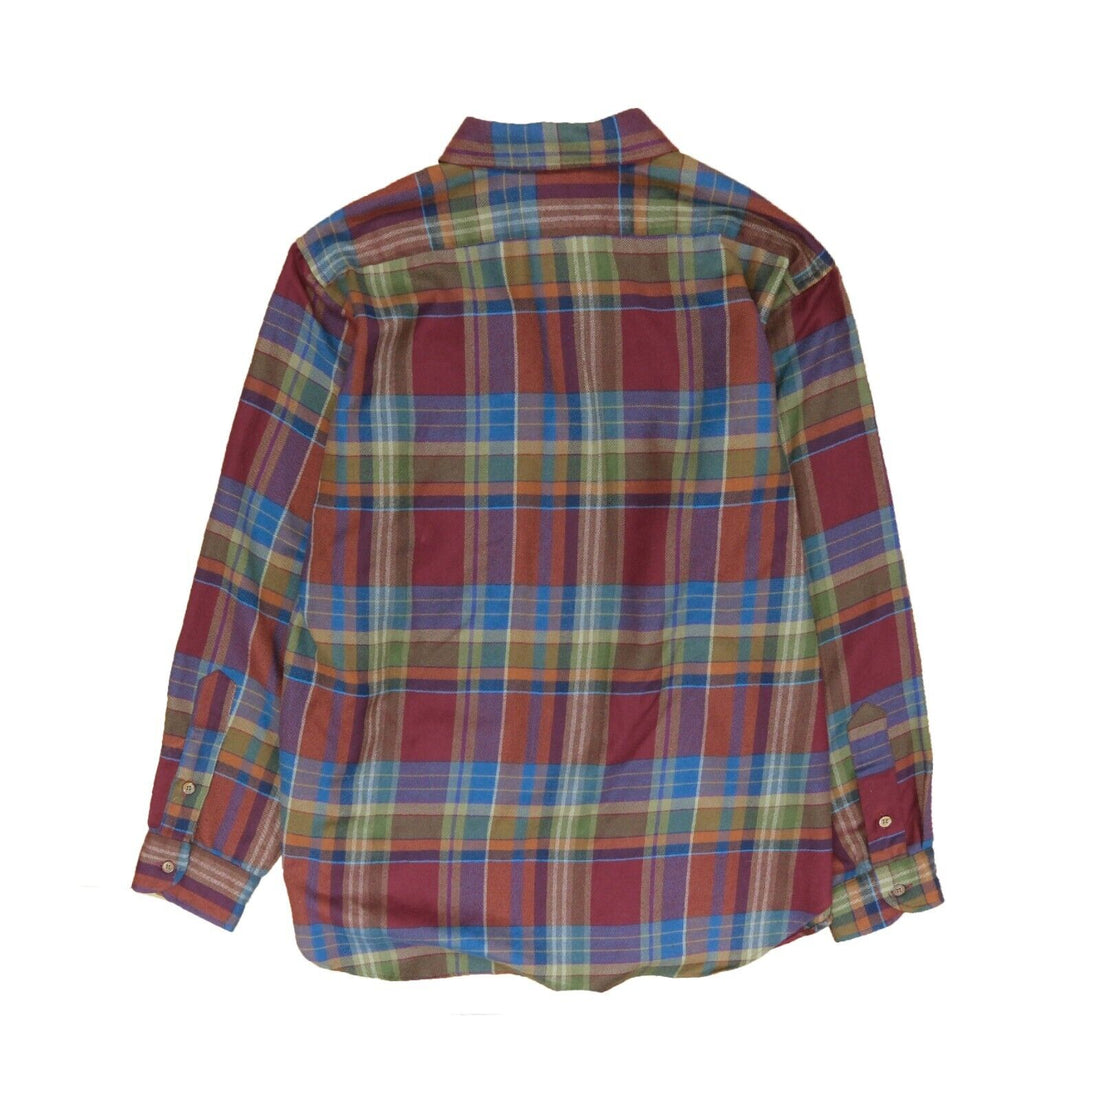 Vintage Pendleton Wool Plaid Lobo Button Up Shirt Size Large Made USA Red